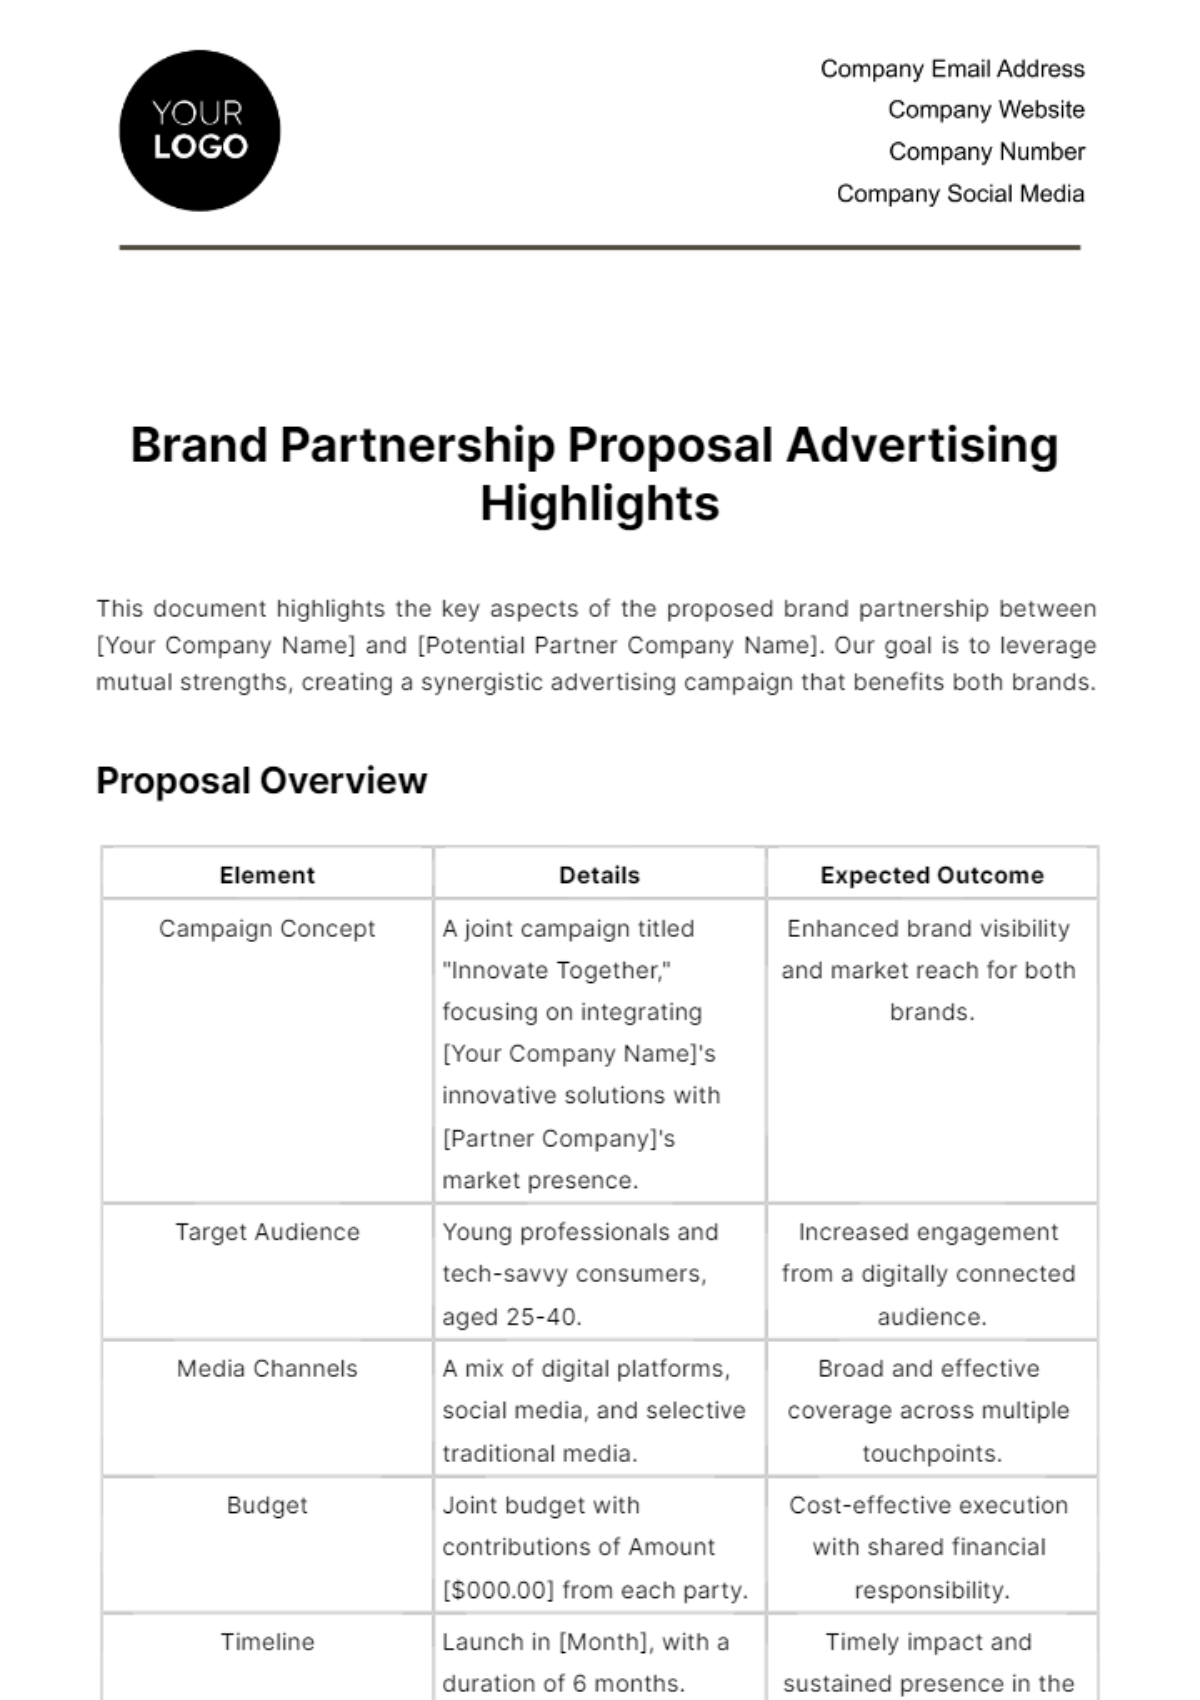 Brand Partnership Proposal Advertising Highlights Template